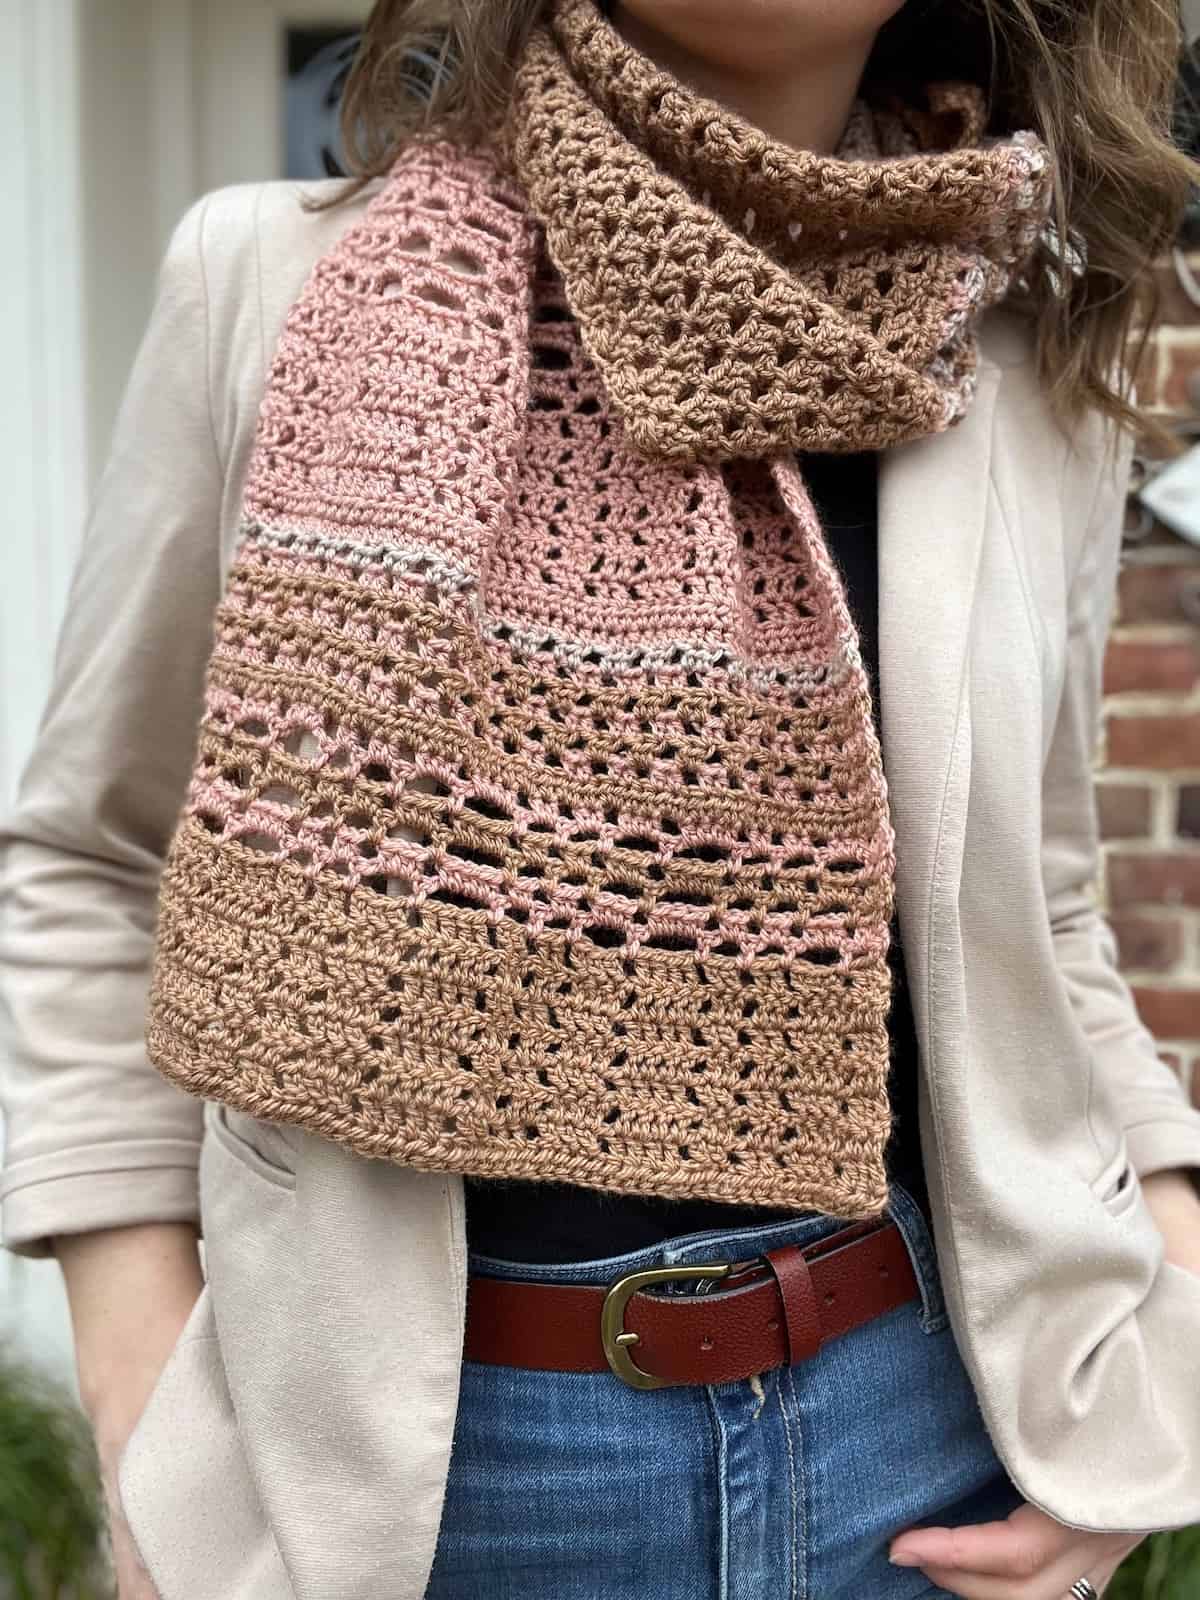 Elegant crochet scarf pattern in color stripes worn by a woman.